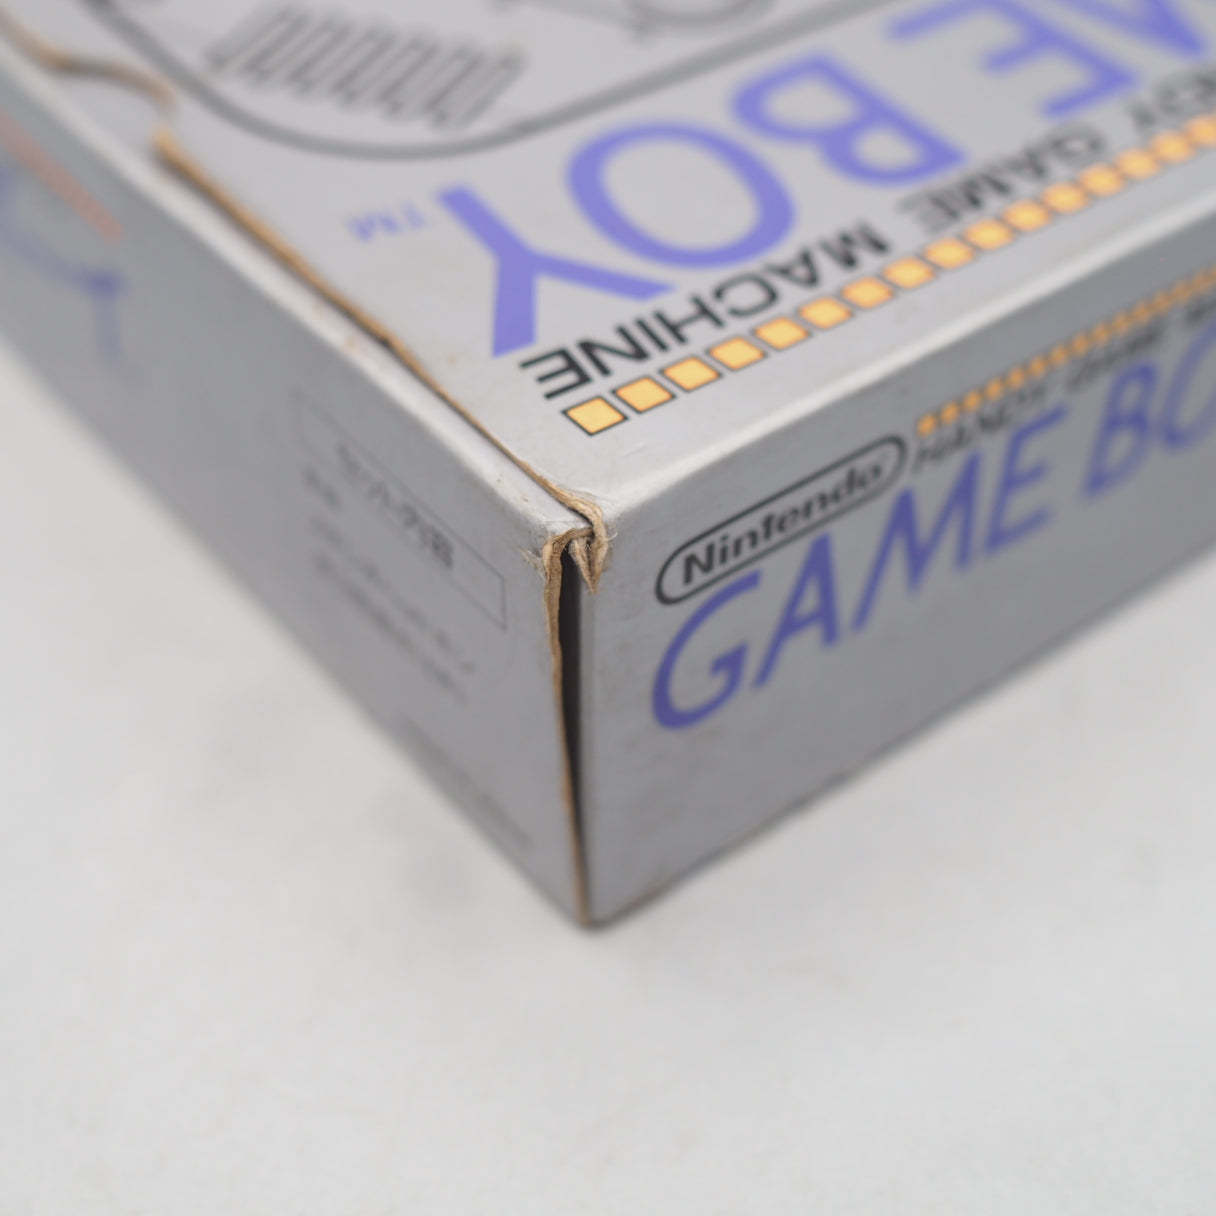 Nintendo GAME BOY Console DGB-001 [Boxed] [Gray] No.2